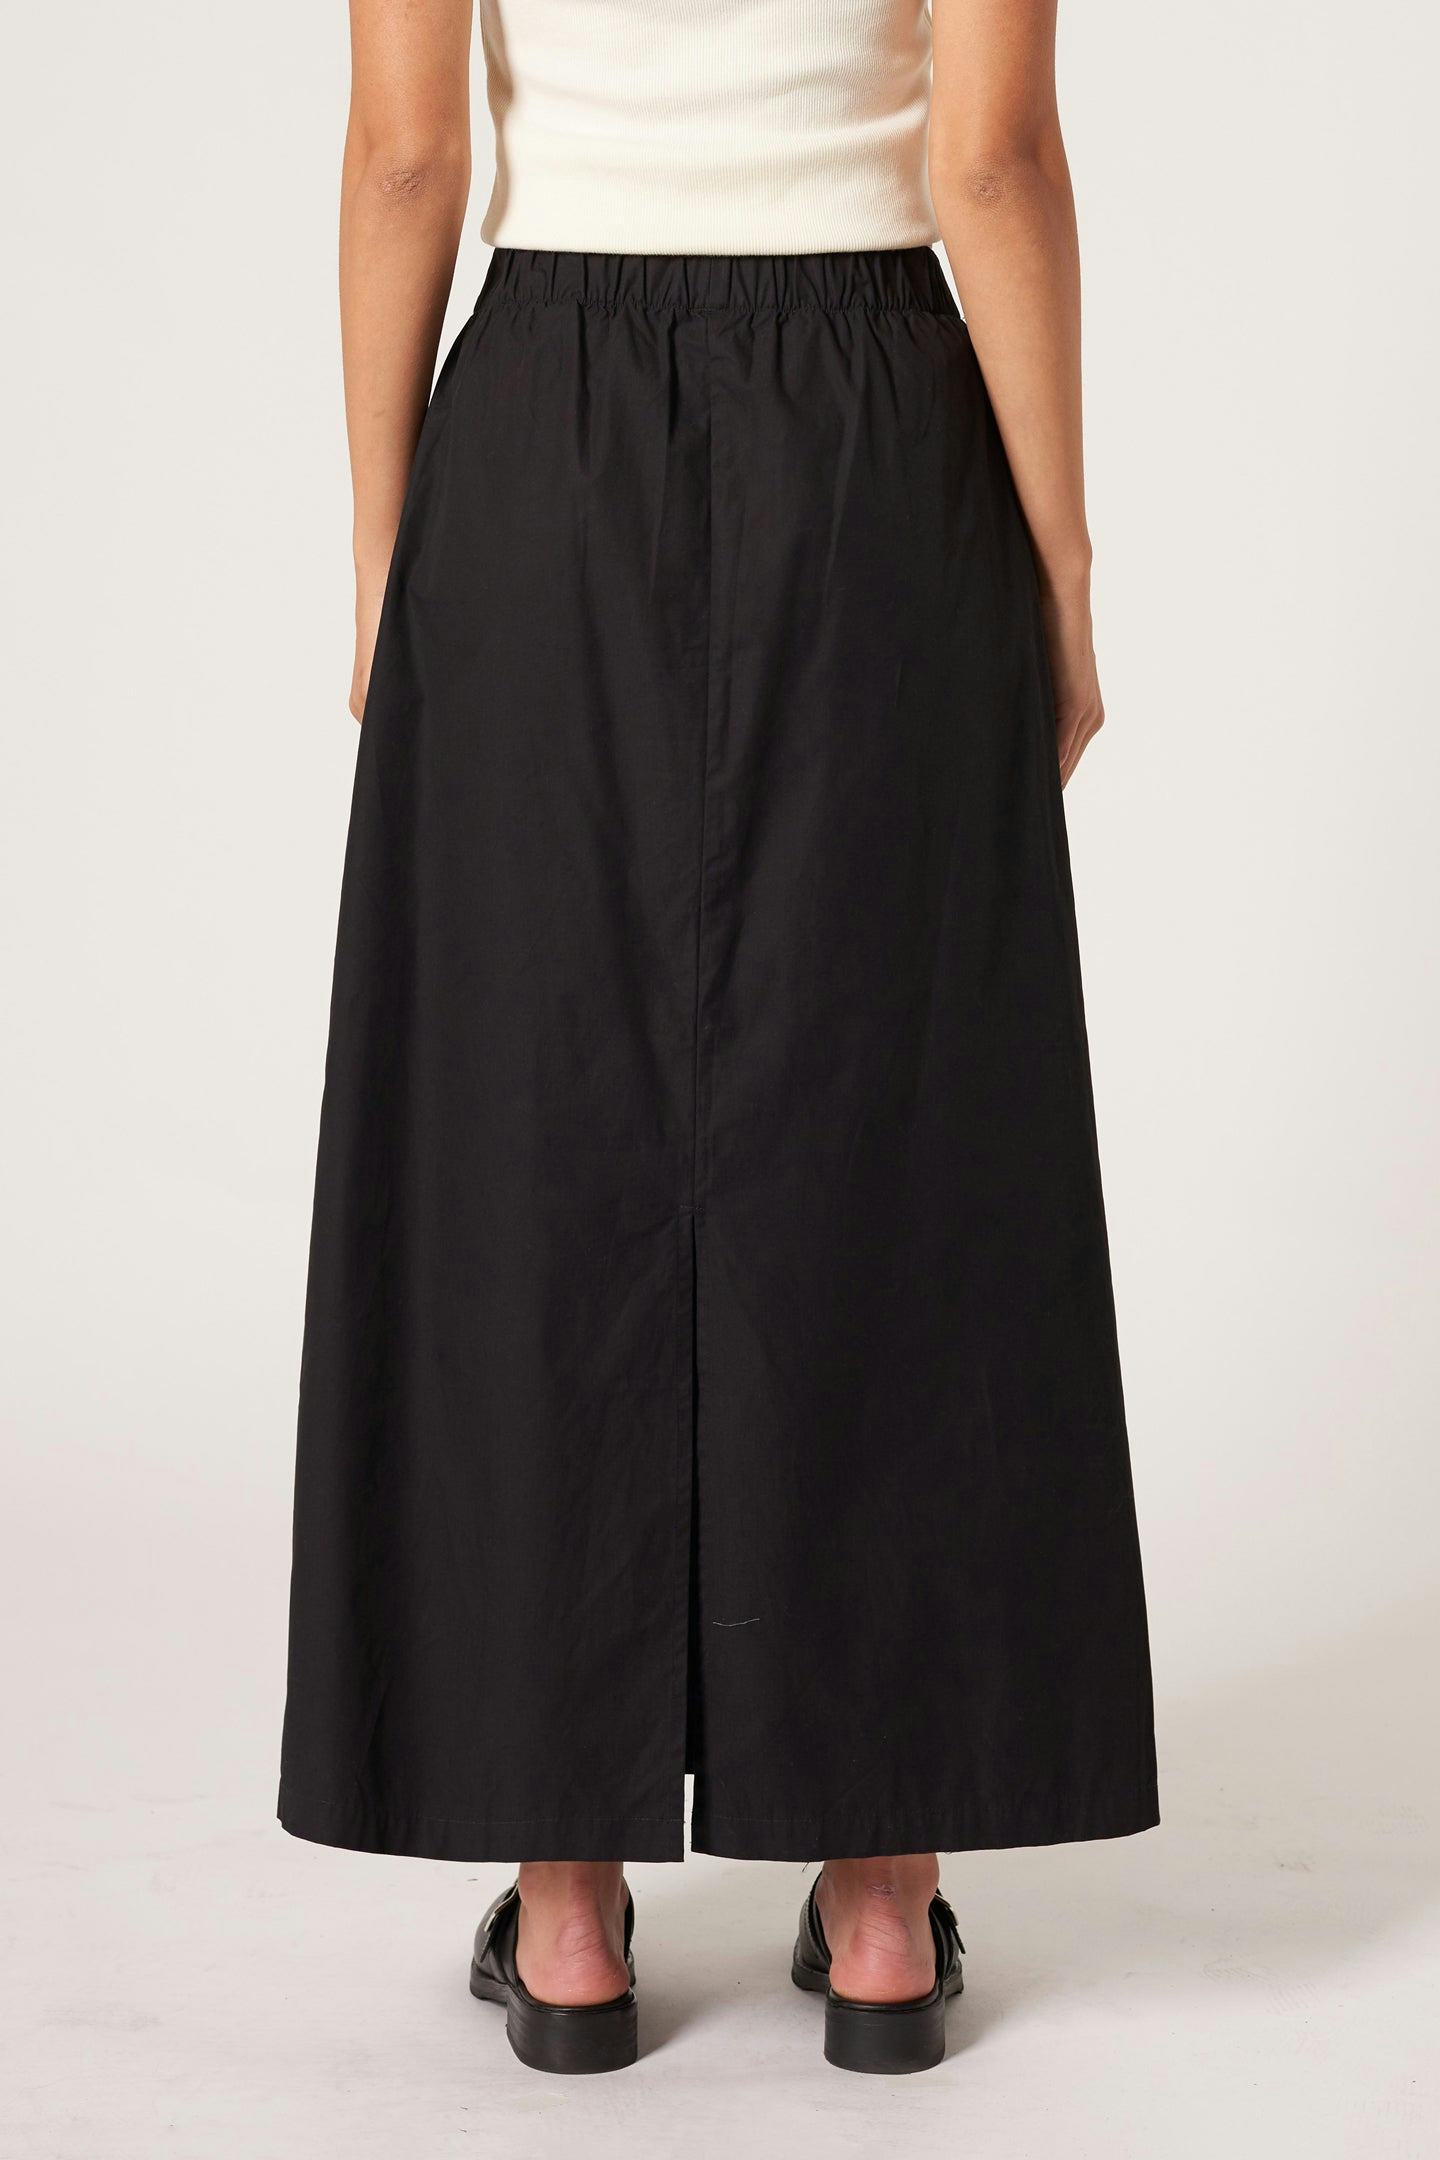 Barrett Skirt - Black Neuw maxi darkred womens-skirts 